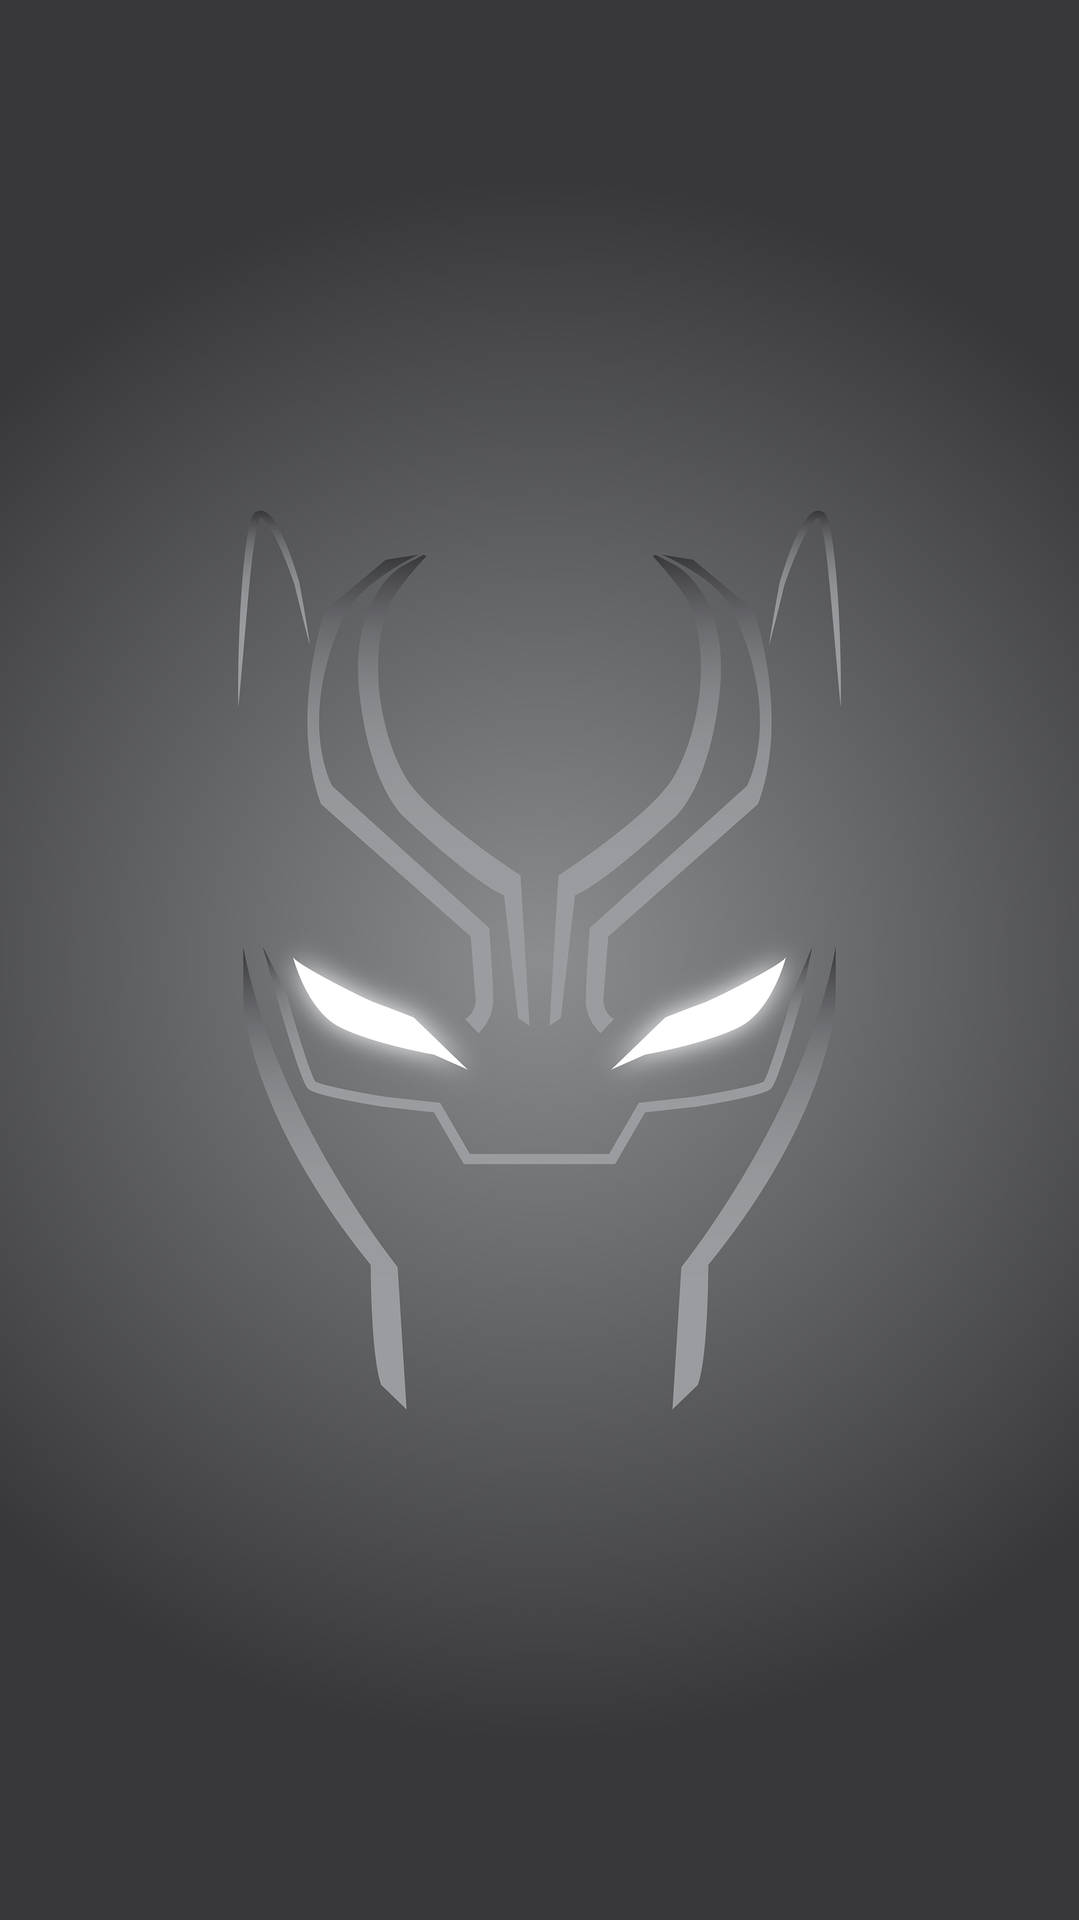 Marvel Minimalist Black Panther Mask Wallpaper